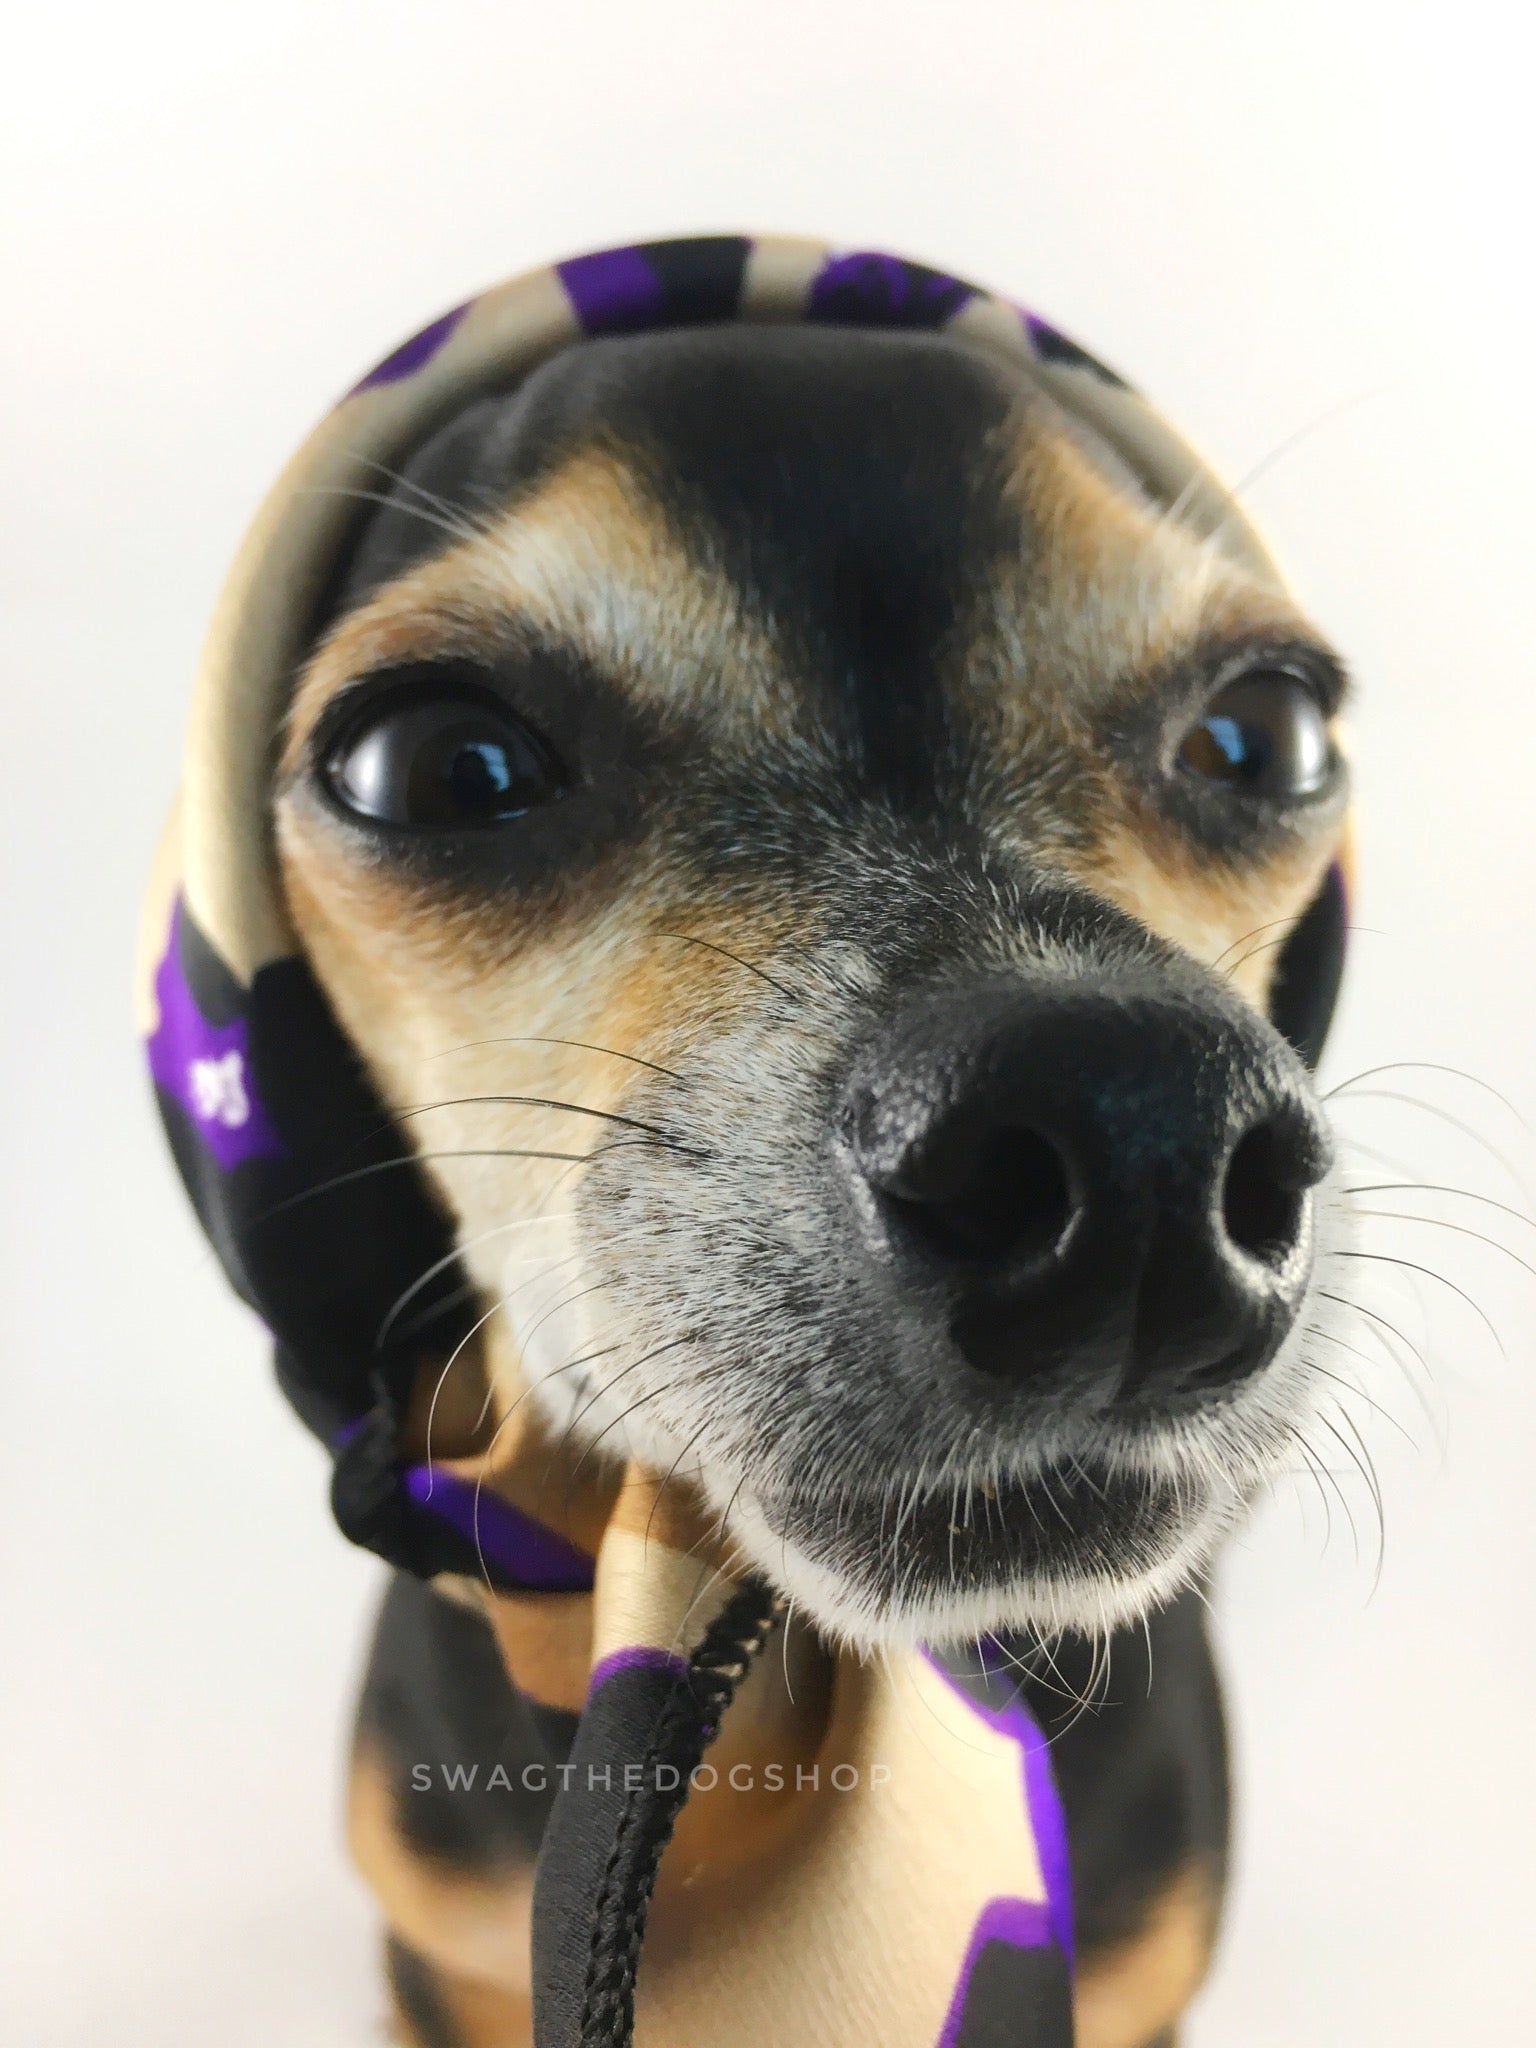 Fierce Beige with Purple Swagdana Scarf - Bust of Cute Chihuahua Wearing Swagdana Scarf as Headscarf. Dog Bandana. Dog Scarf